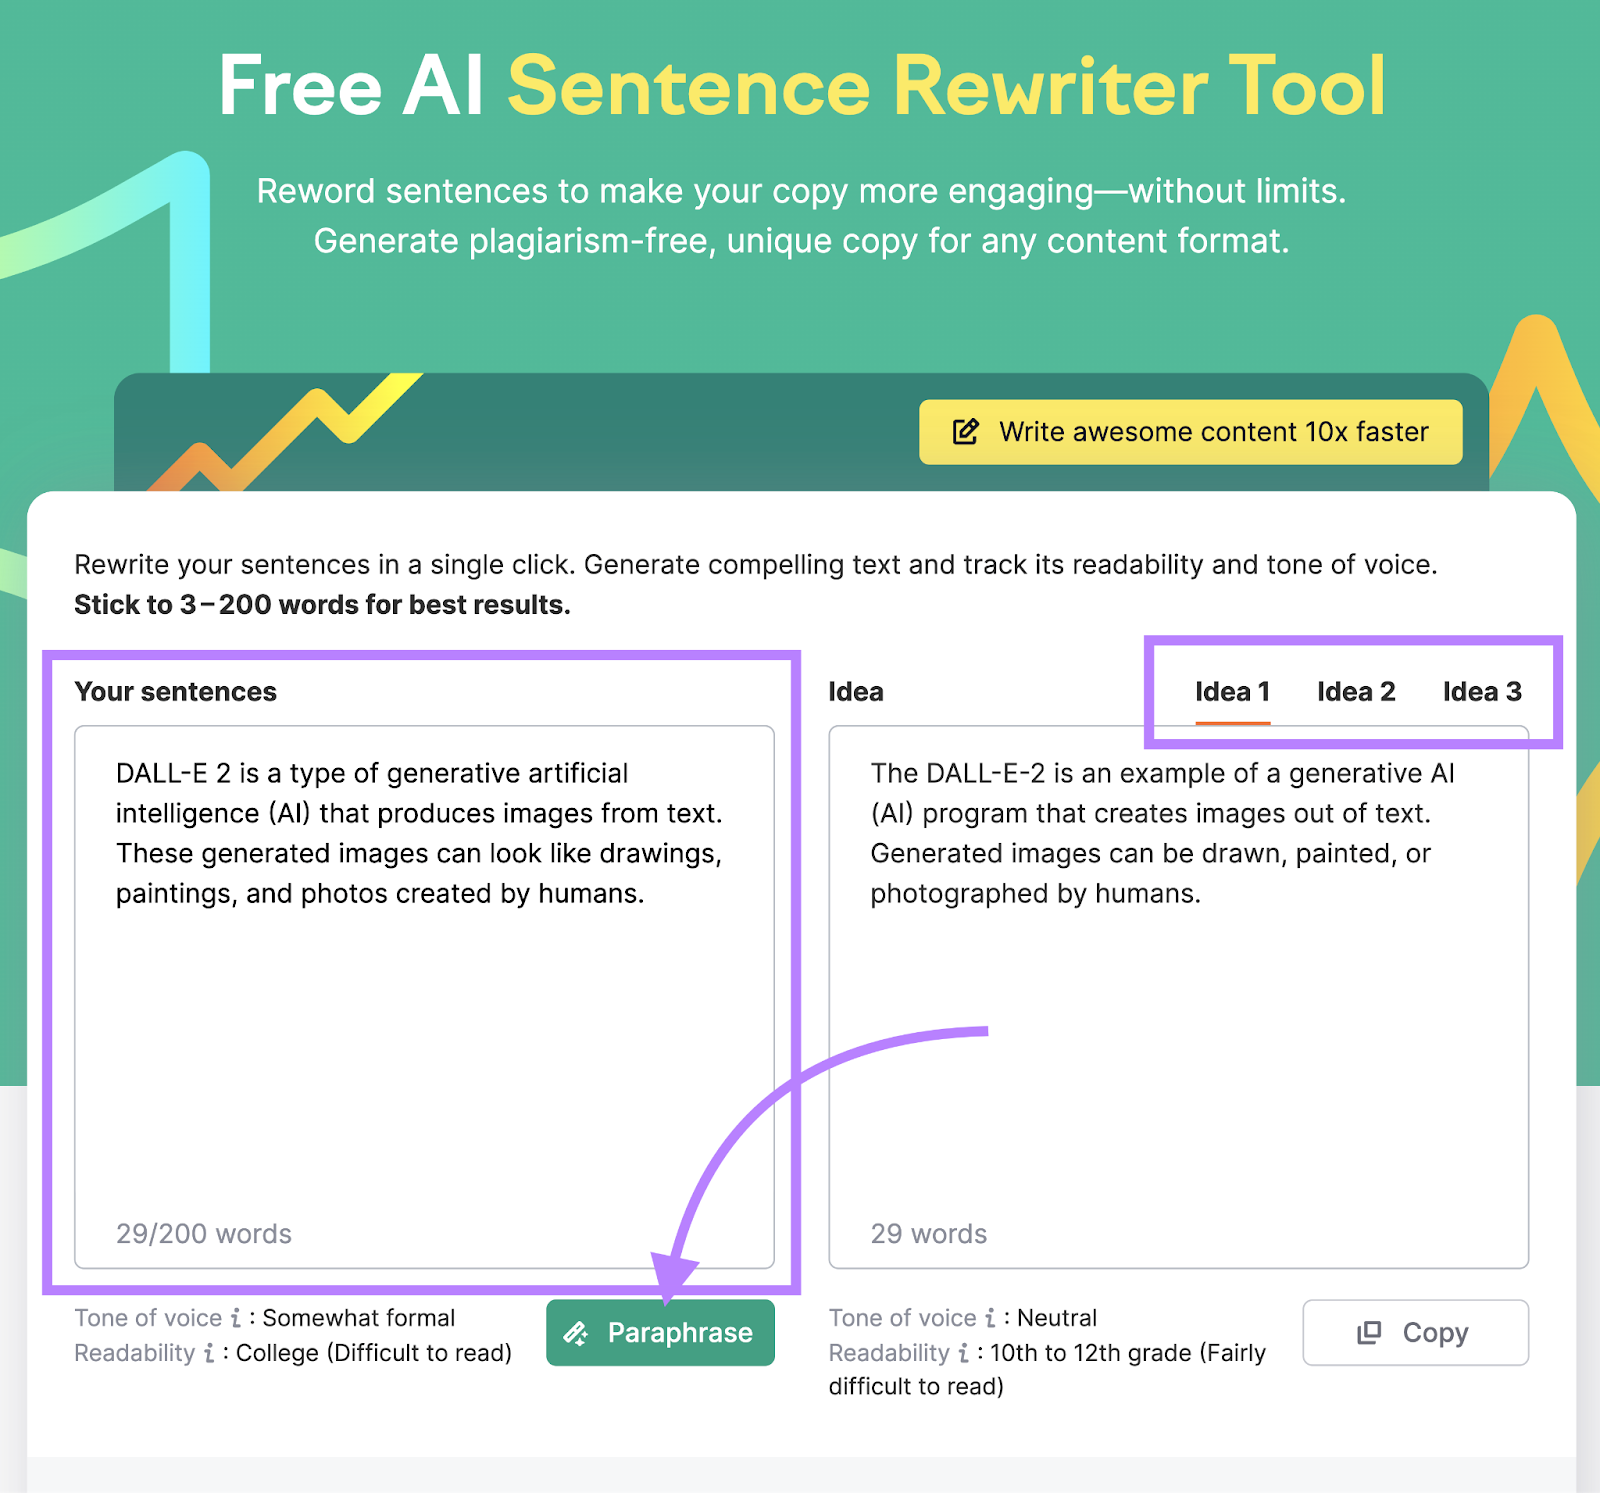 Semrush’s Sentence Rewriter Tool